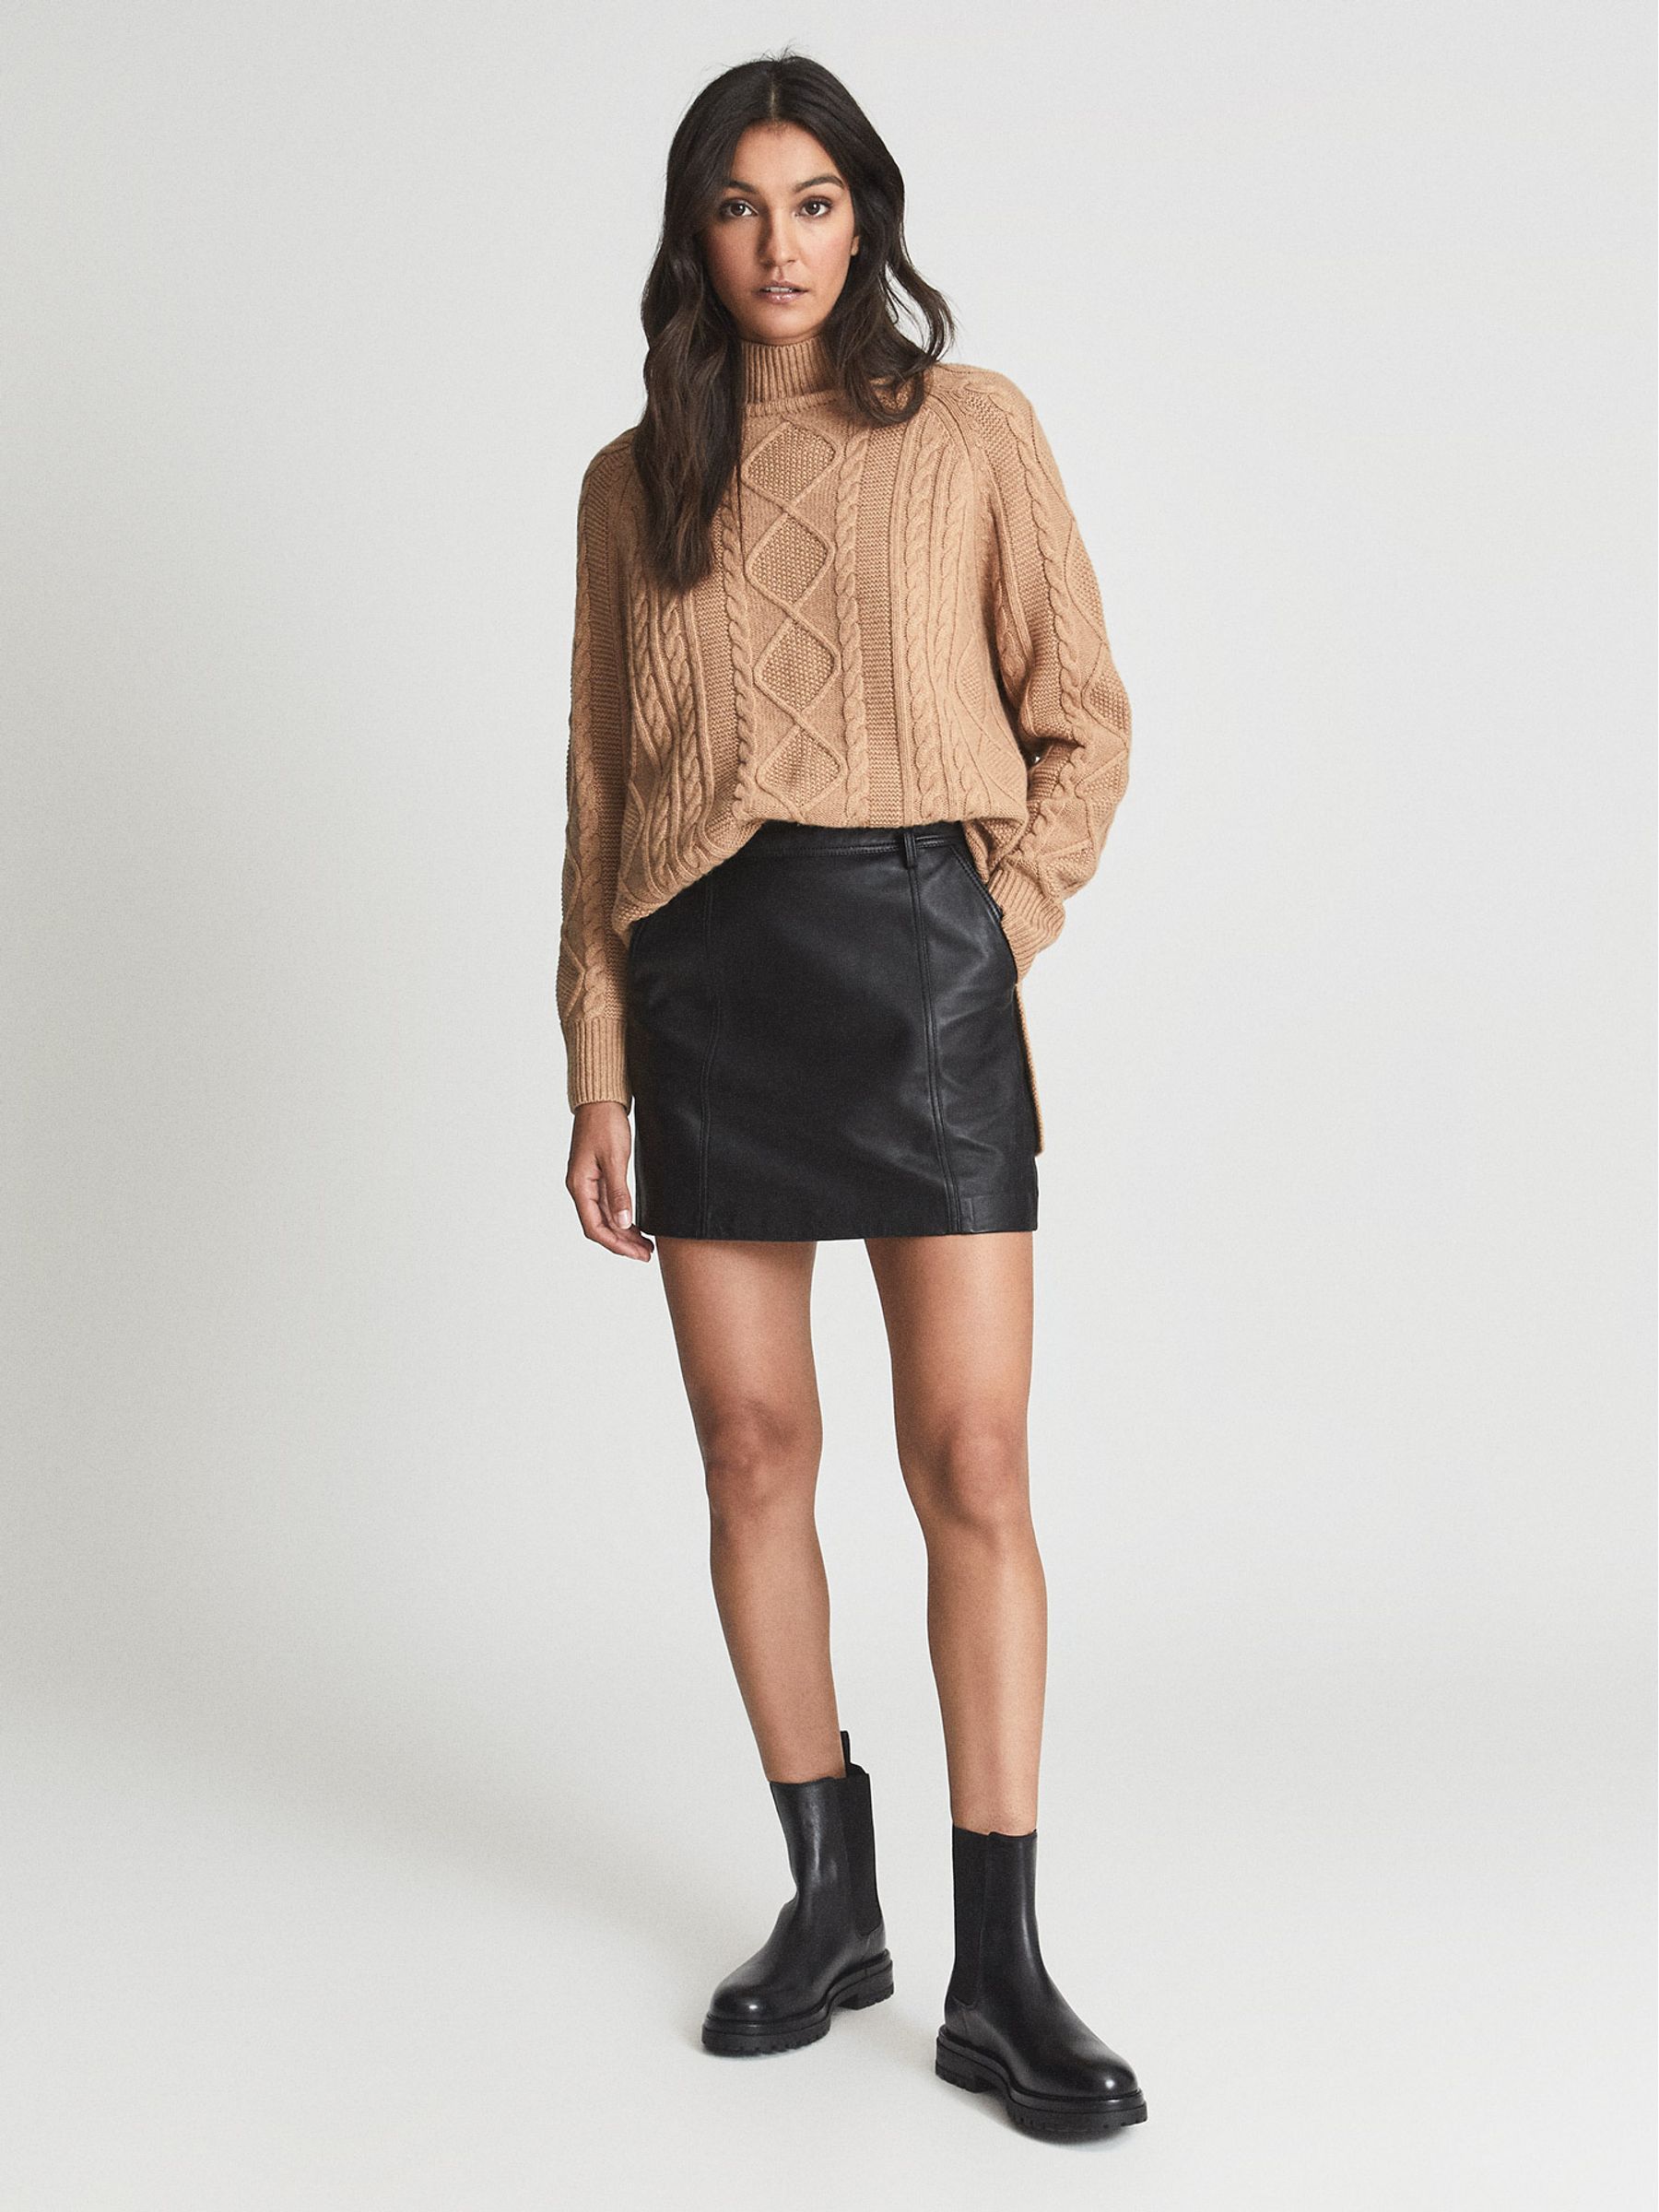 Reiss Eliza Leather Mini Skirt - REISS